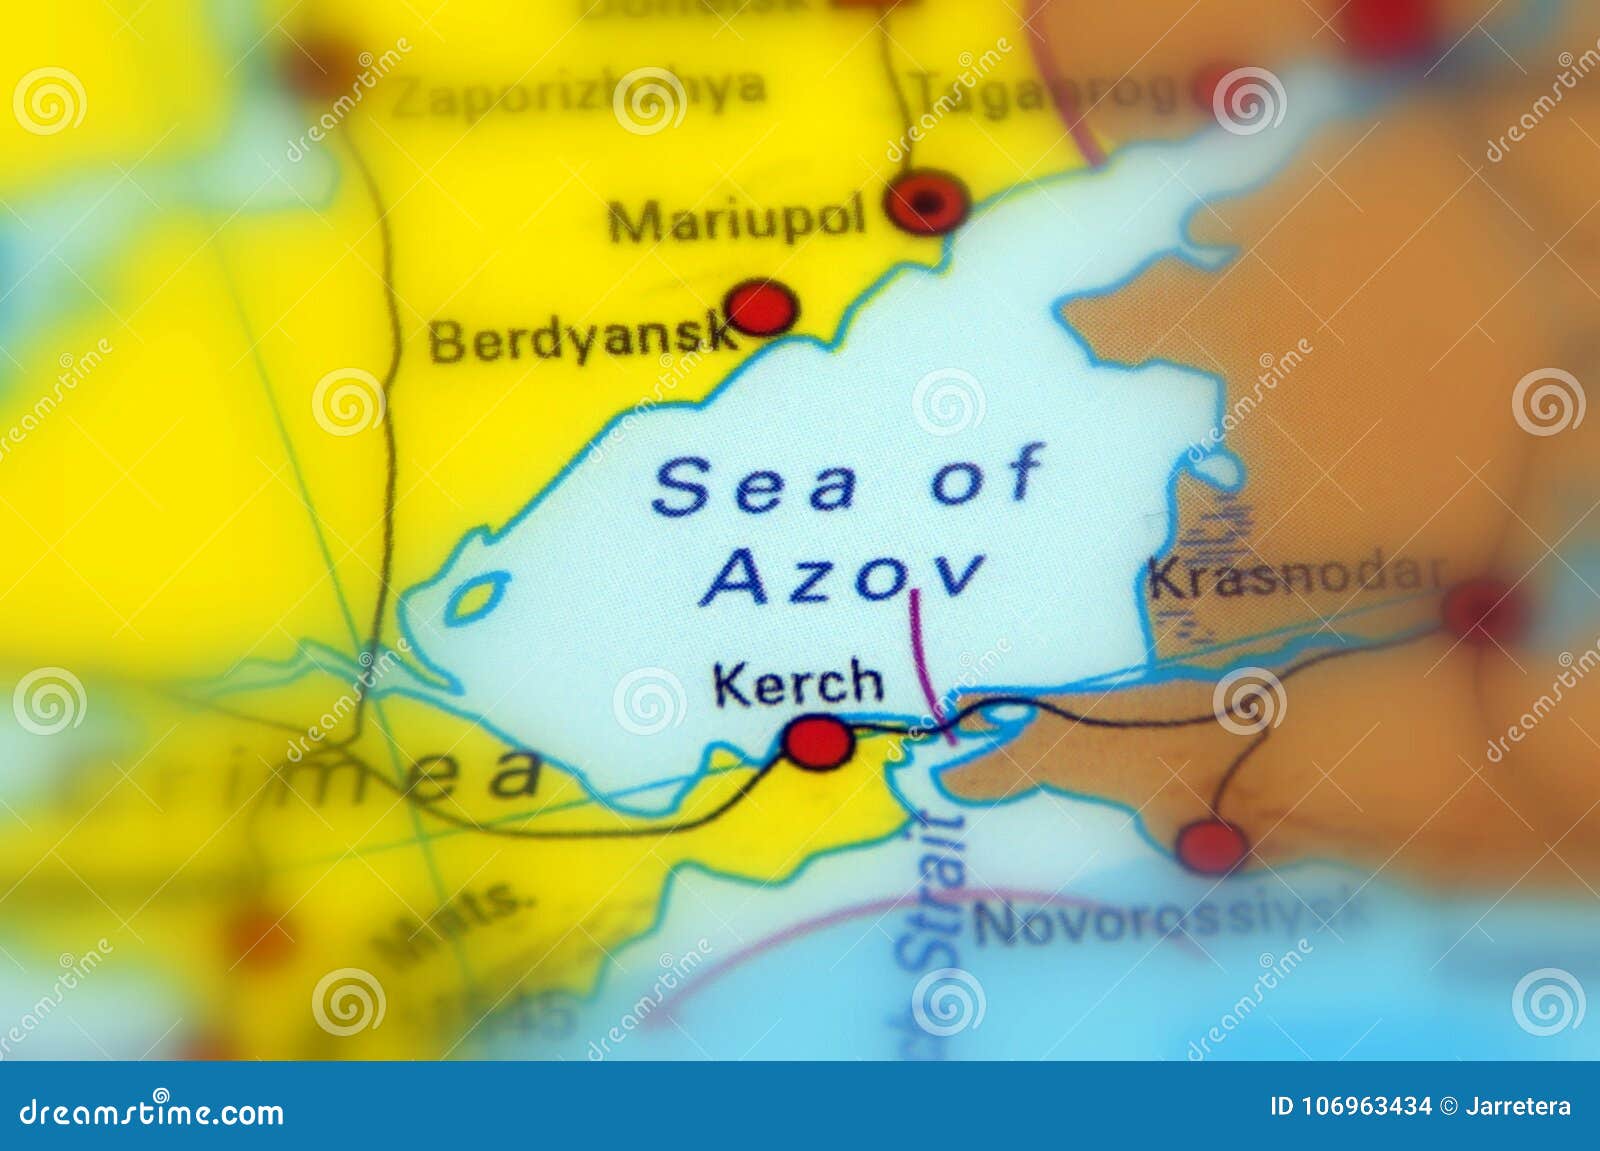 Острова в азовском море на карте. Азовское море в зарубежной Европы. Азовское море на английском языке. Азовское море на карте Европы. Азовское море замок Мари.